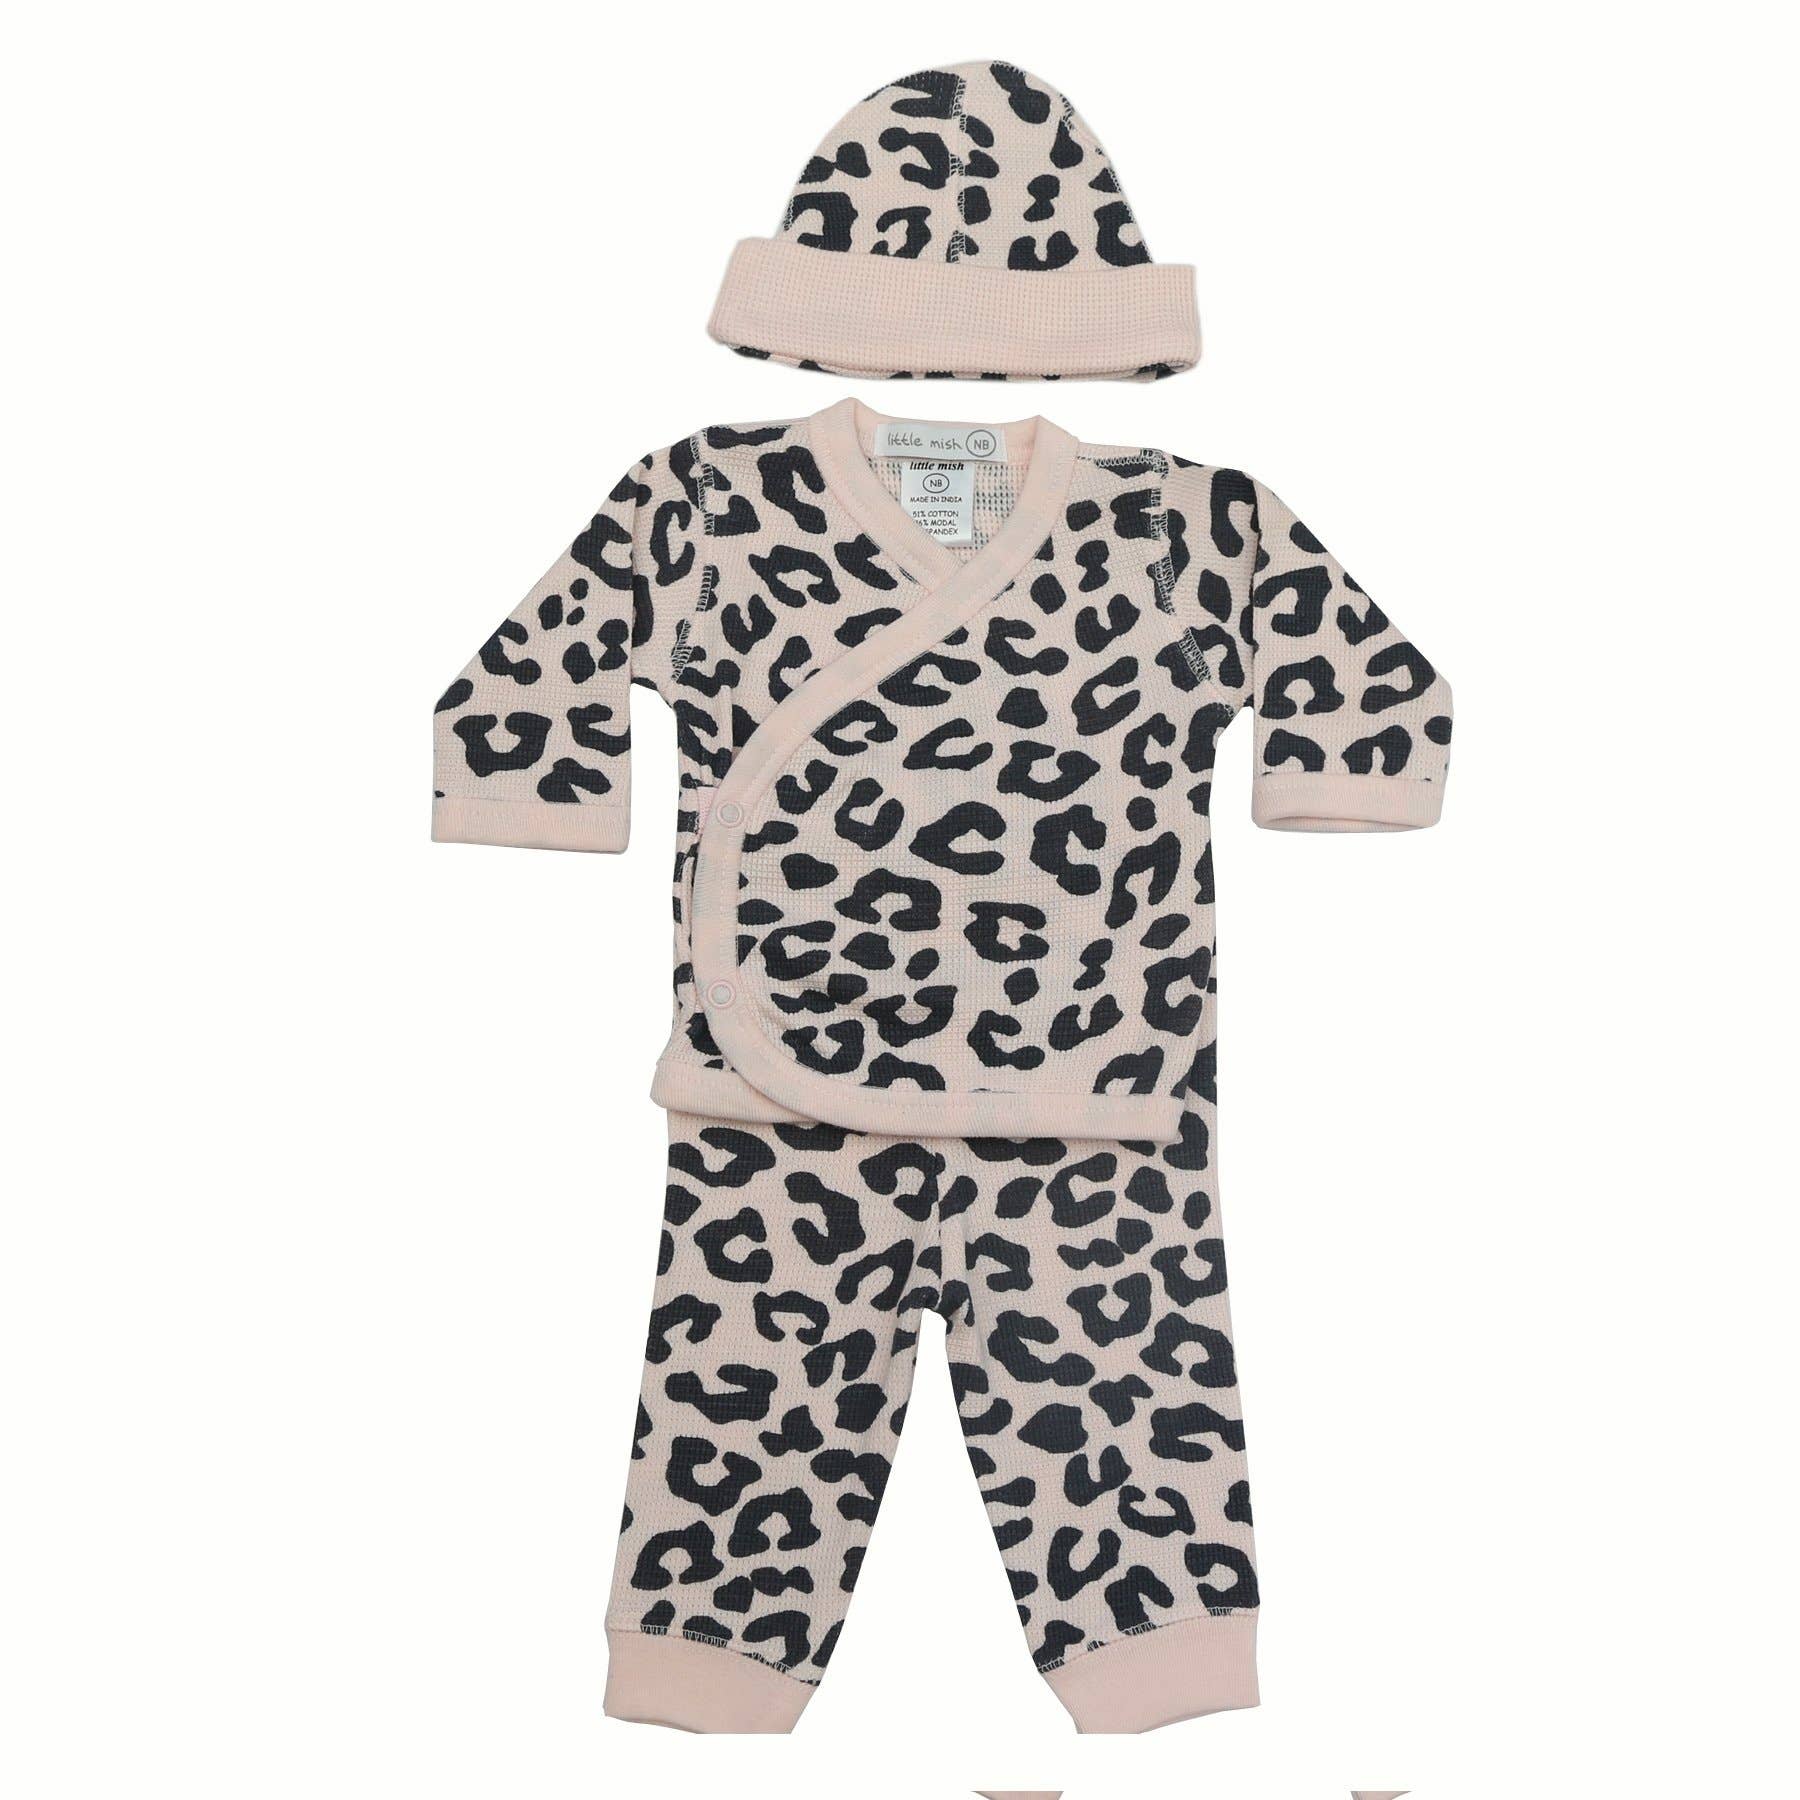 Baby Steps and Mish Boys Organic Cotton Pajama Sets